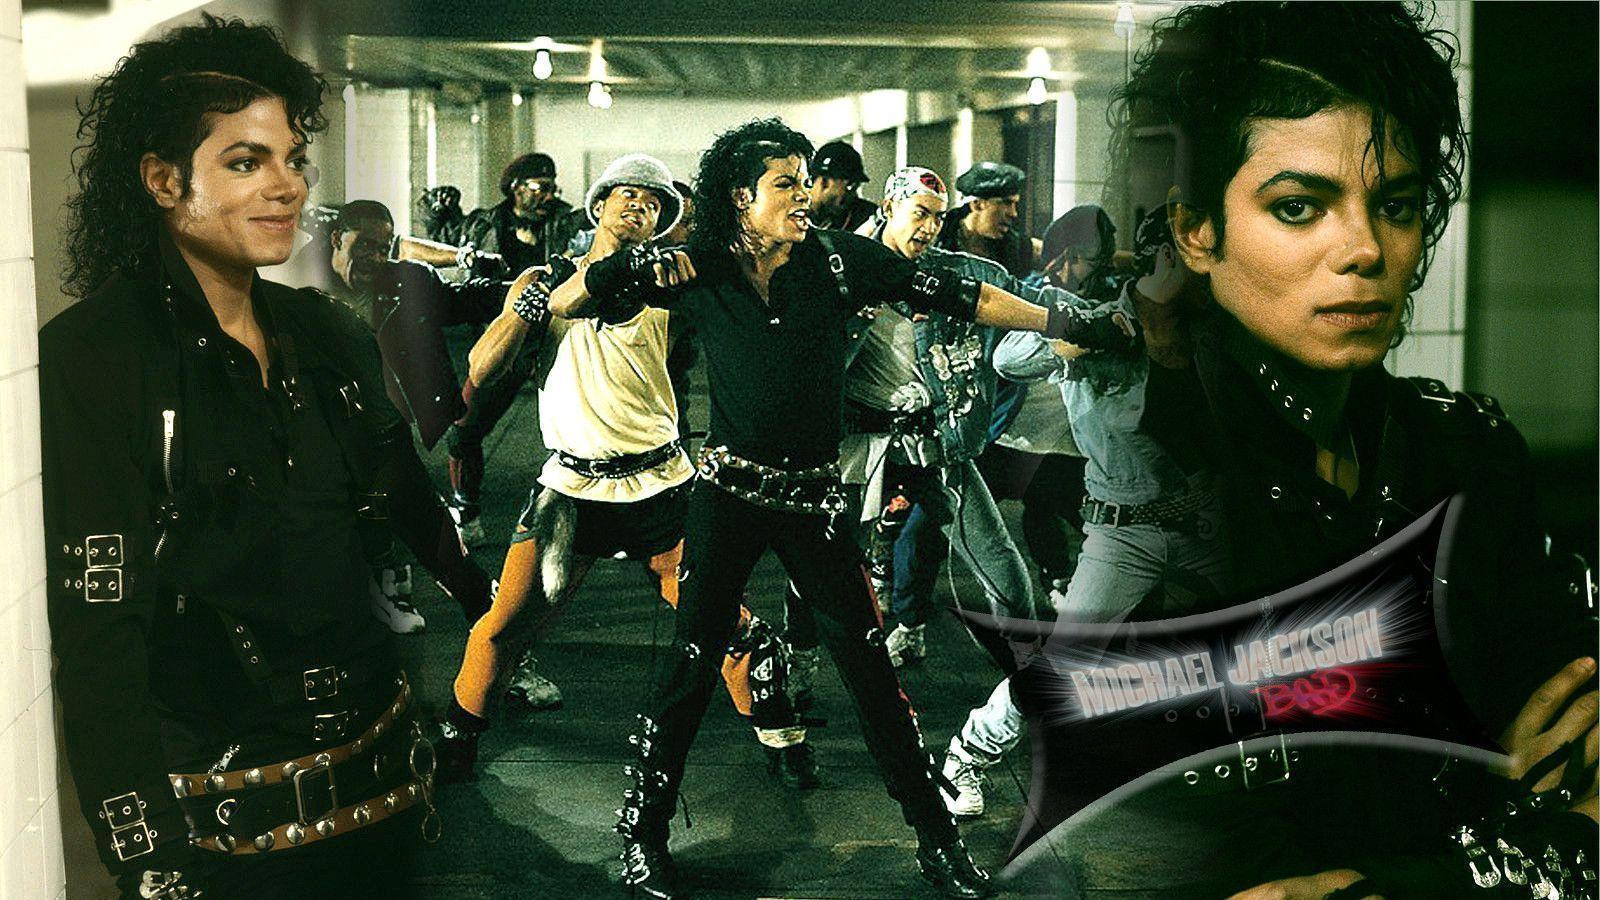 Michael Jackson Forever: LES REGALO WALLPAPERS